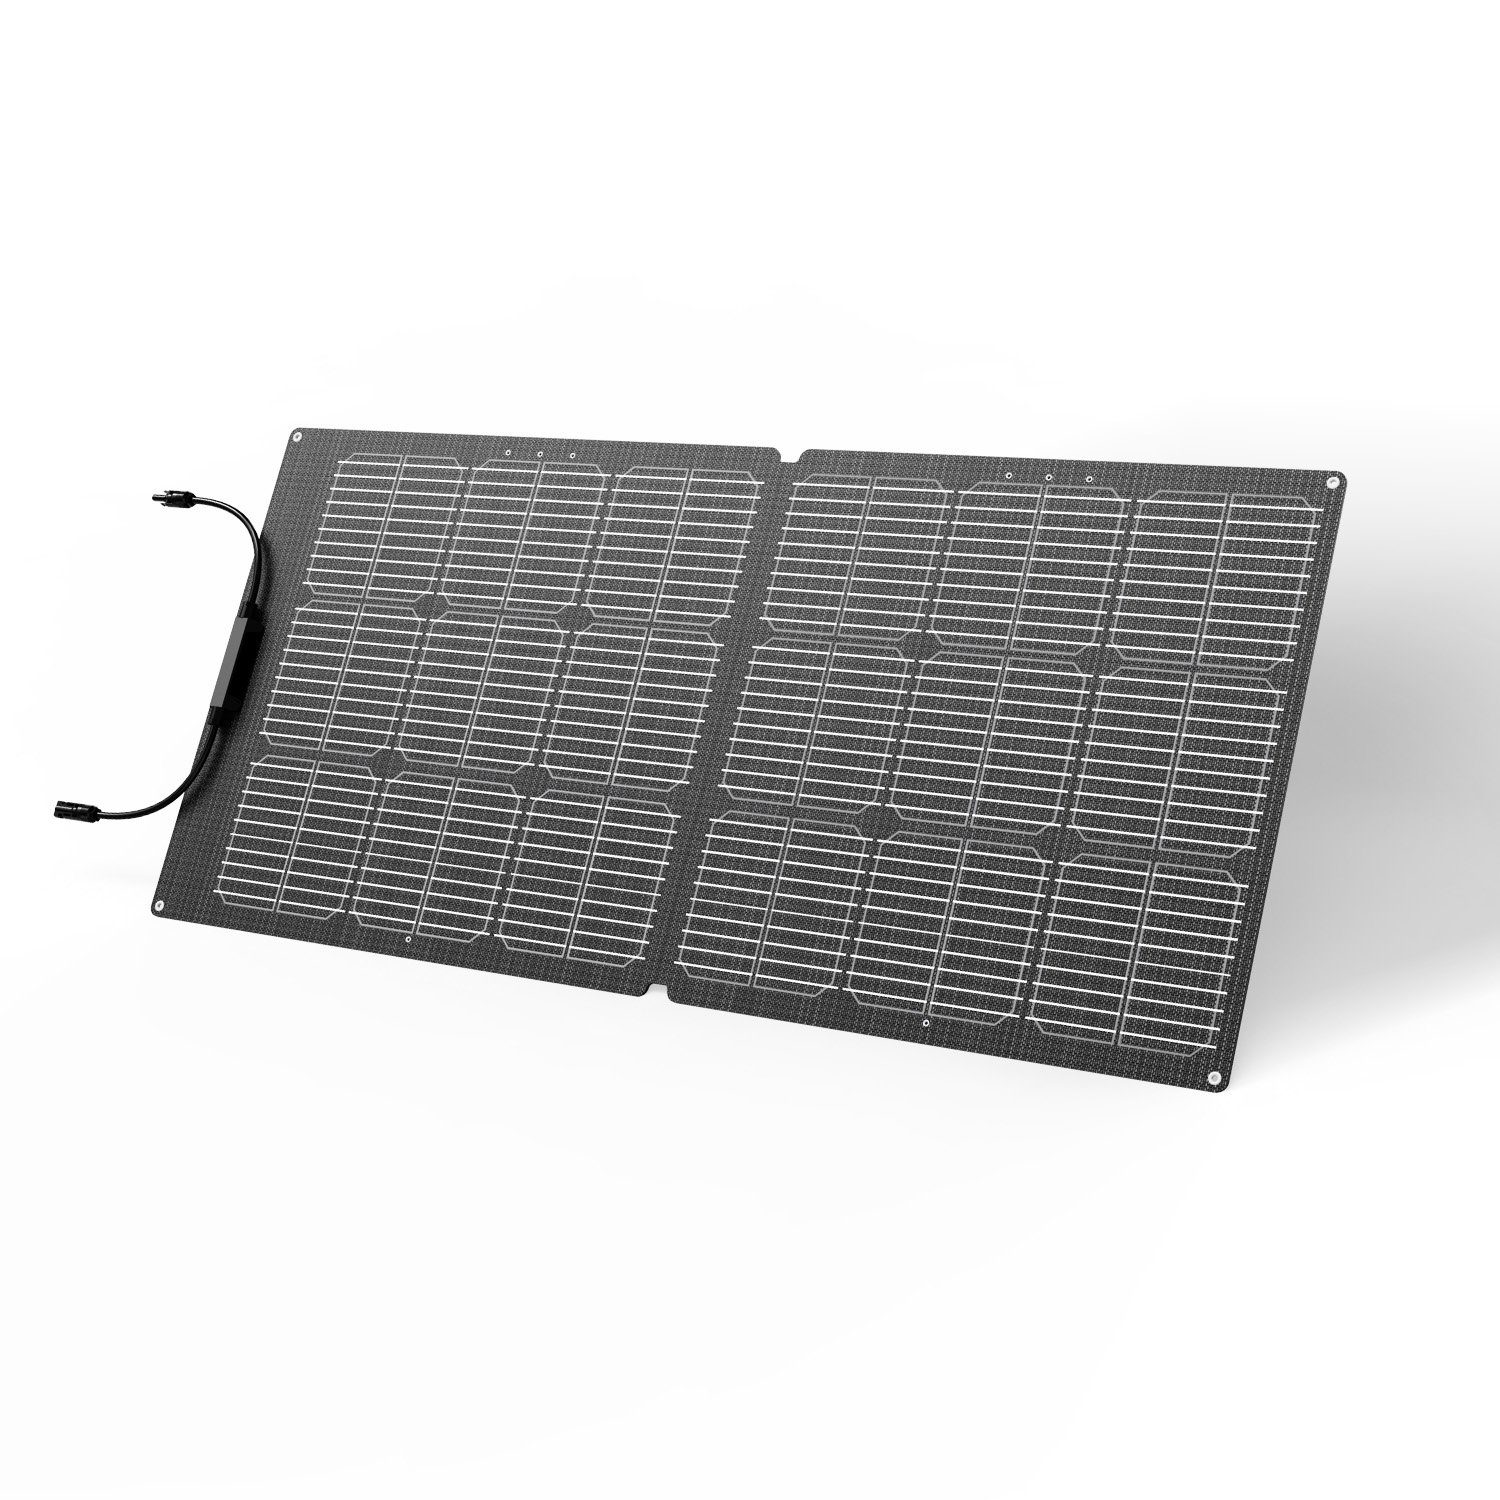 CITYSPORTS Solaranlage FULLSENT, Flexible Solarmodul 100/200W PowerStation für Balkonkraftwerk 100W faltbar